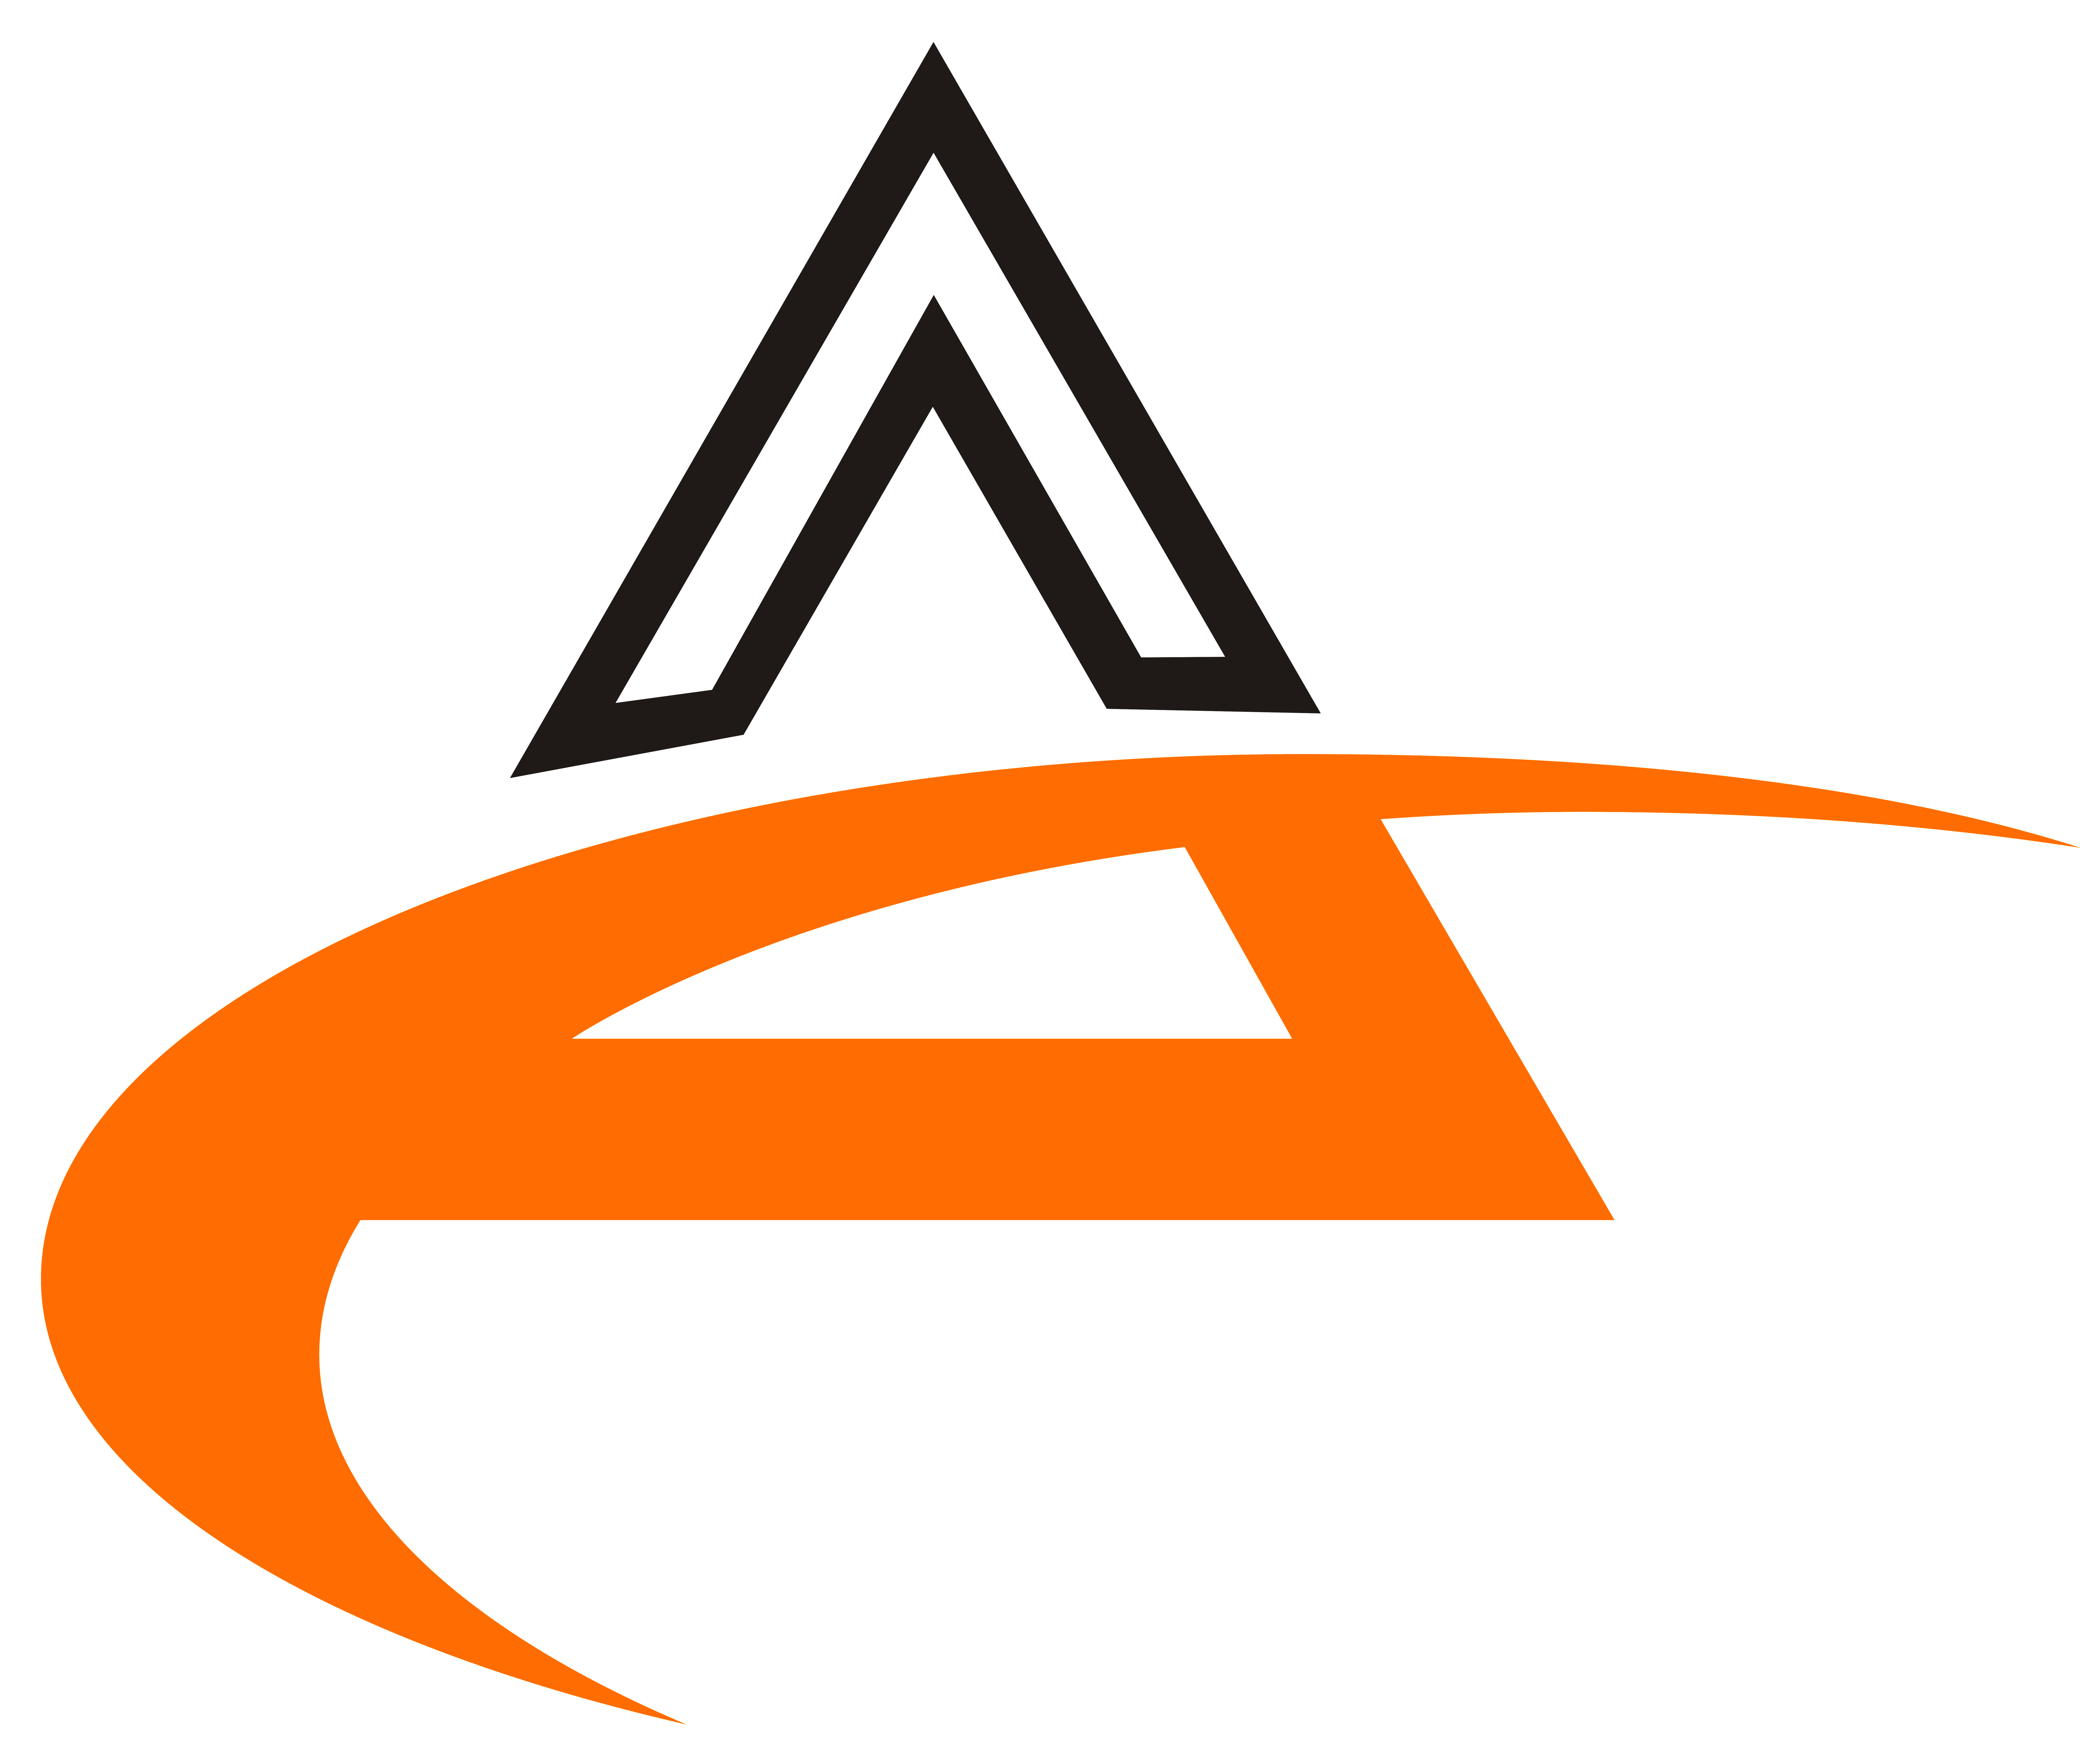 Logo creation for Aviotronics Technologies - Image de marque & branding